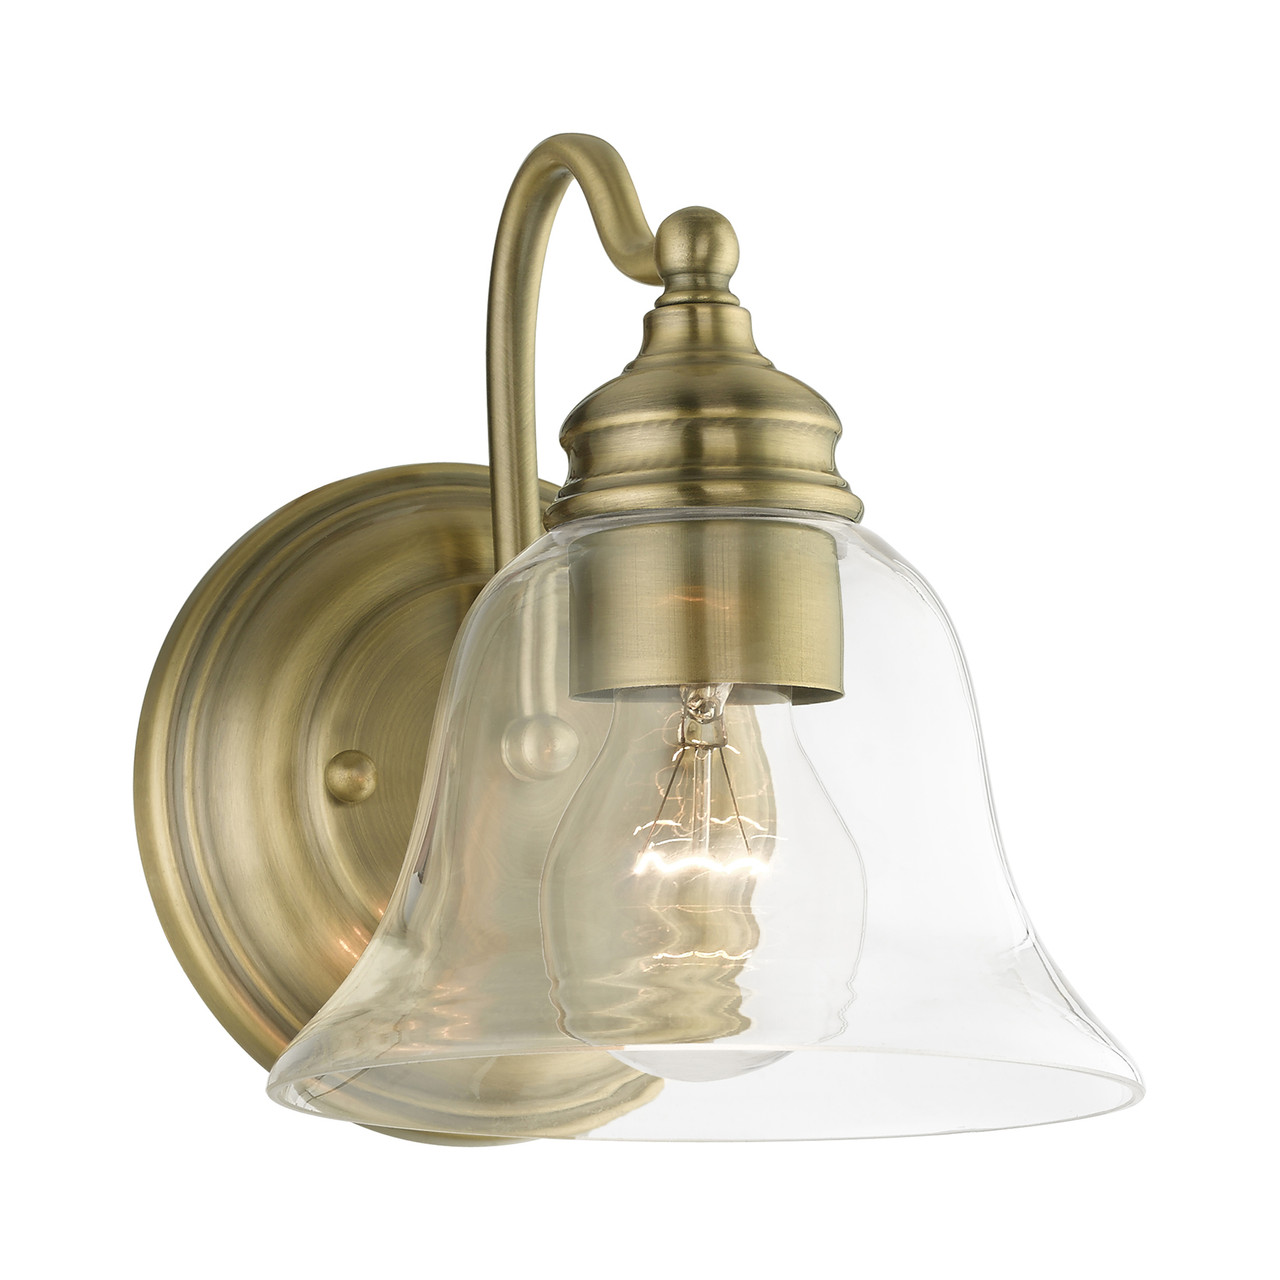 LIVEX LIGHTING 16931-01 1 Light Antique Brass Vanity Sconce